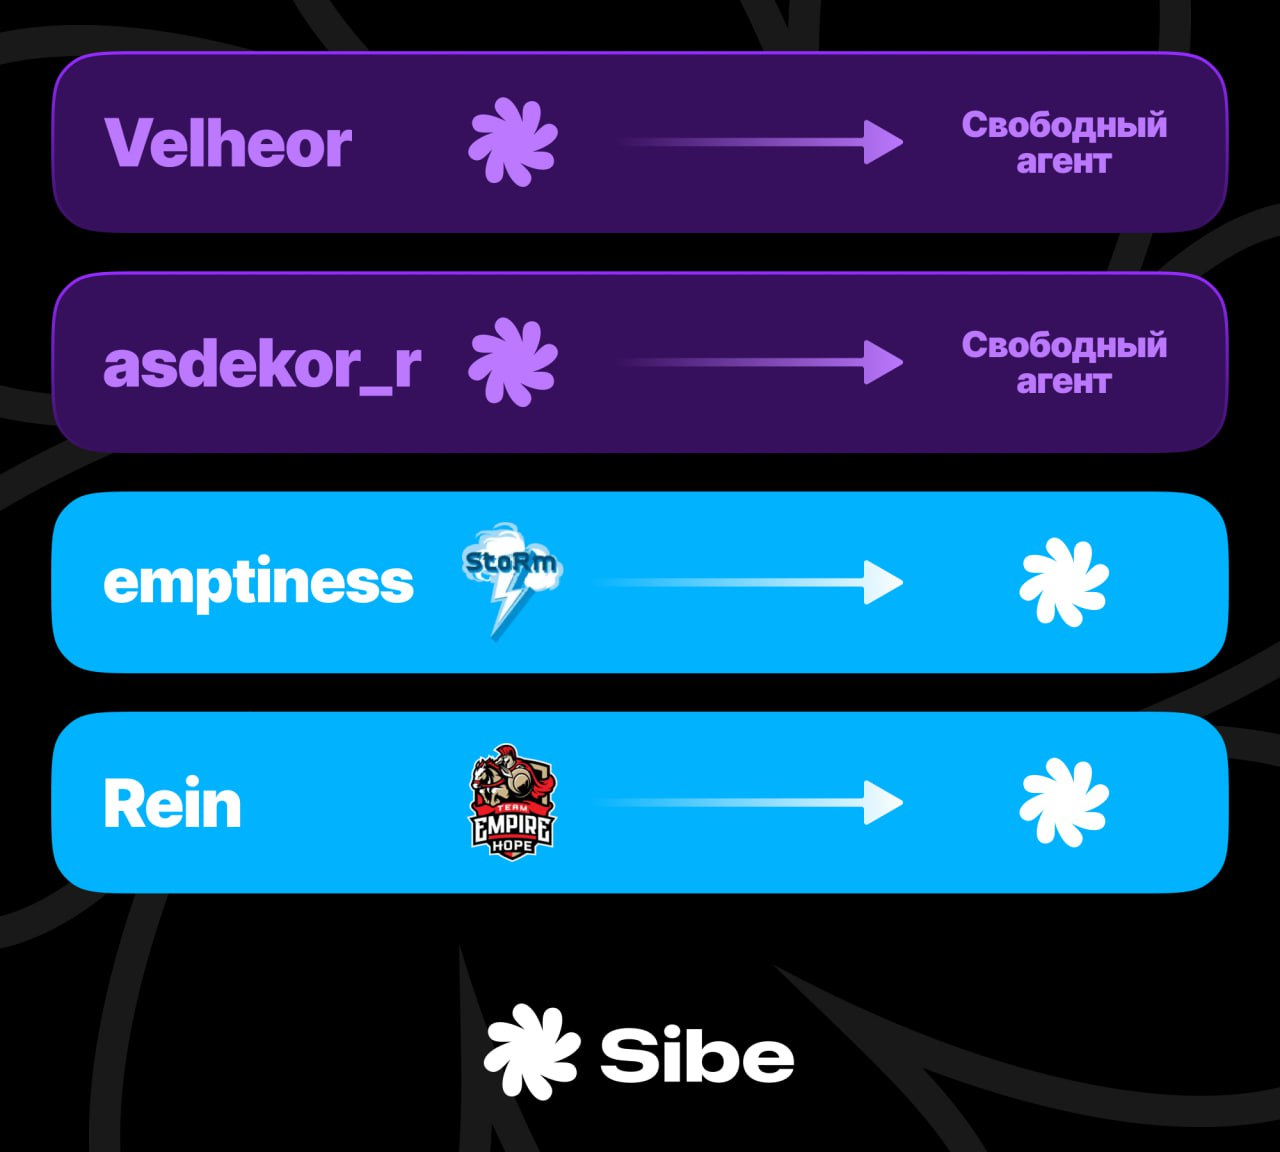 Velheor и asdekor_r ушли из состава SIBE Team по Dota 2